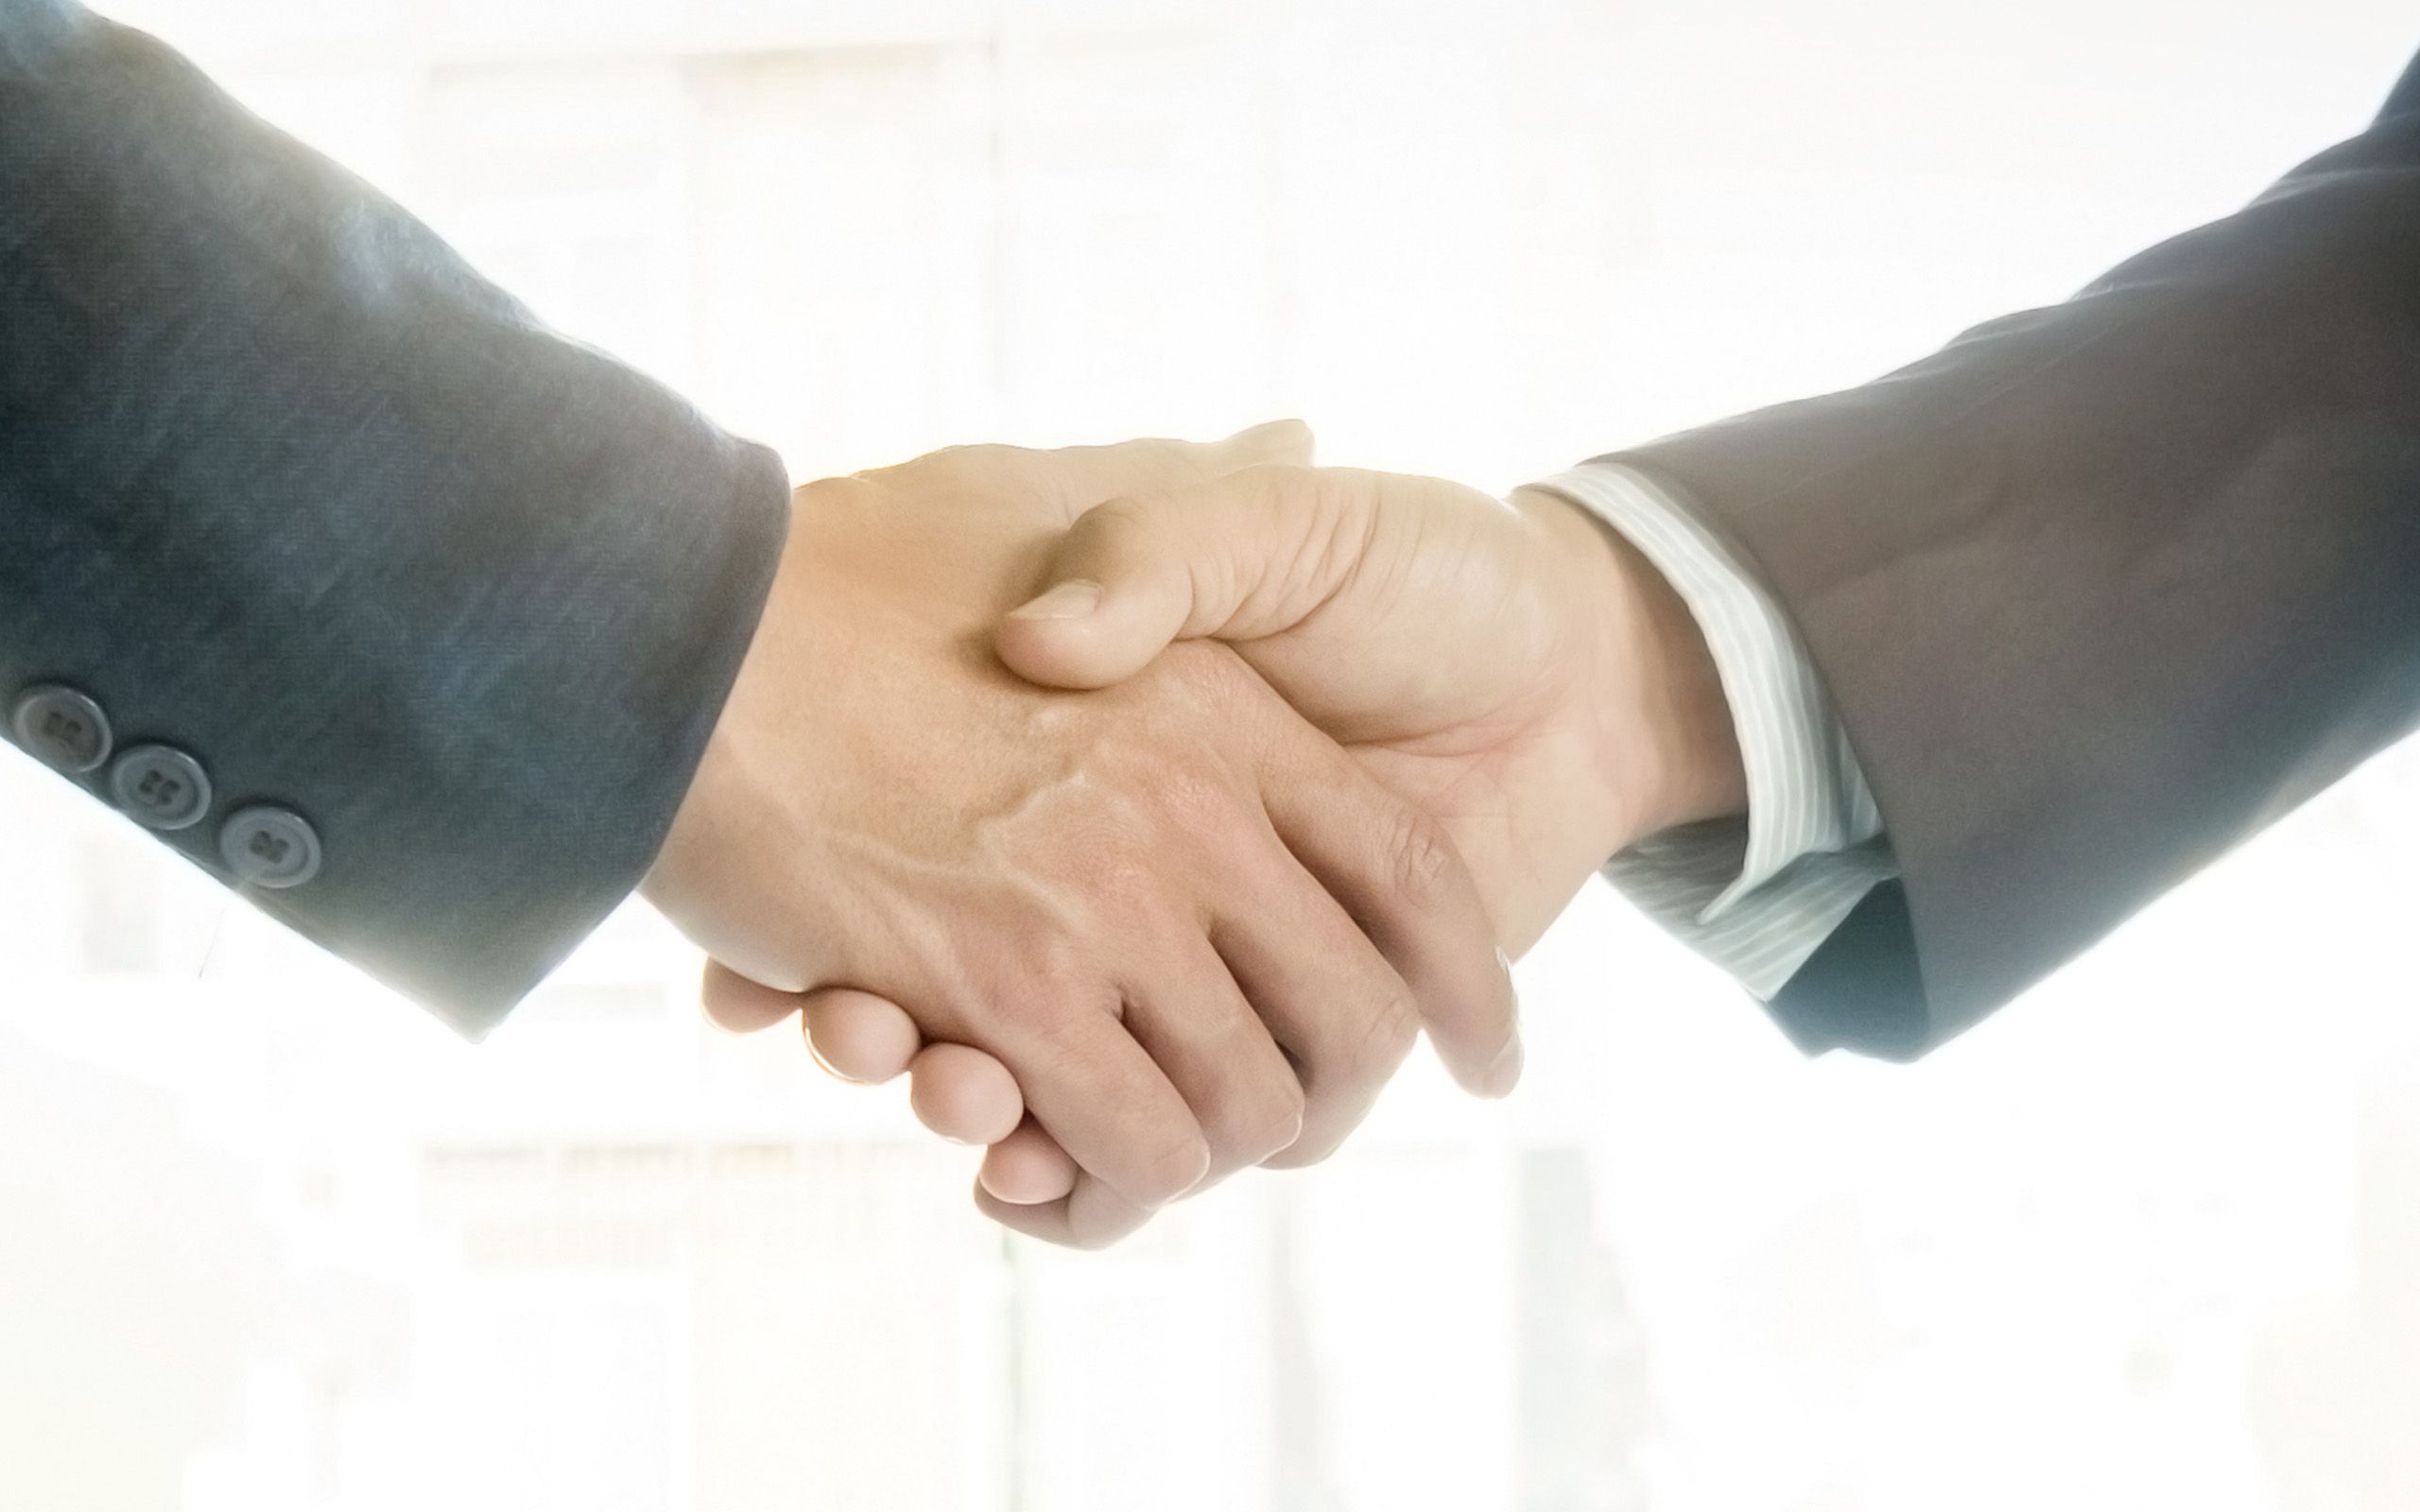 Download wallpaper handshake, two businessmen, business concepts